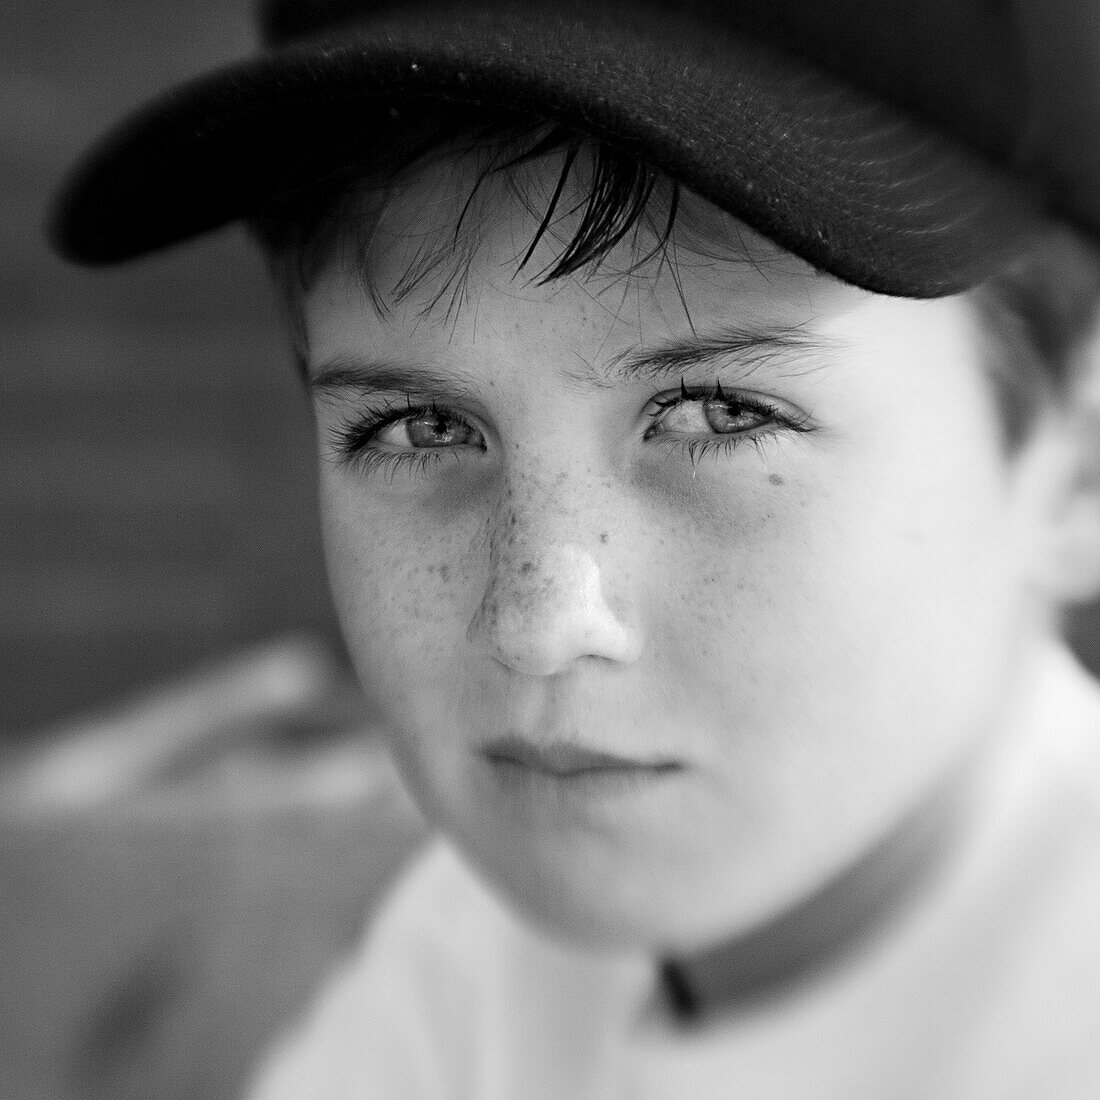 Boy with a cap looking serious (black and white photo using Lensbaby technique), Borden, Western Australia, Australia